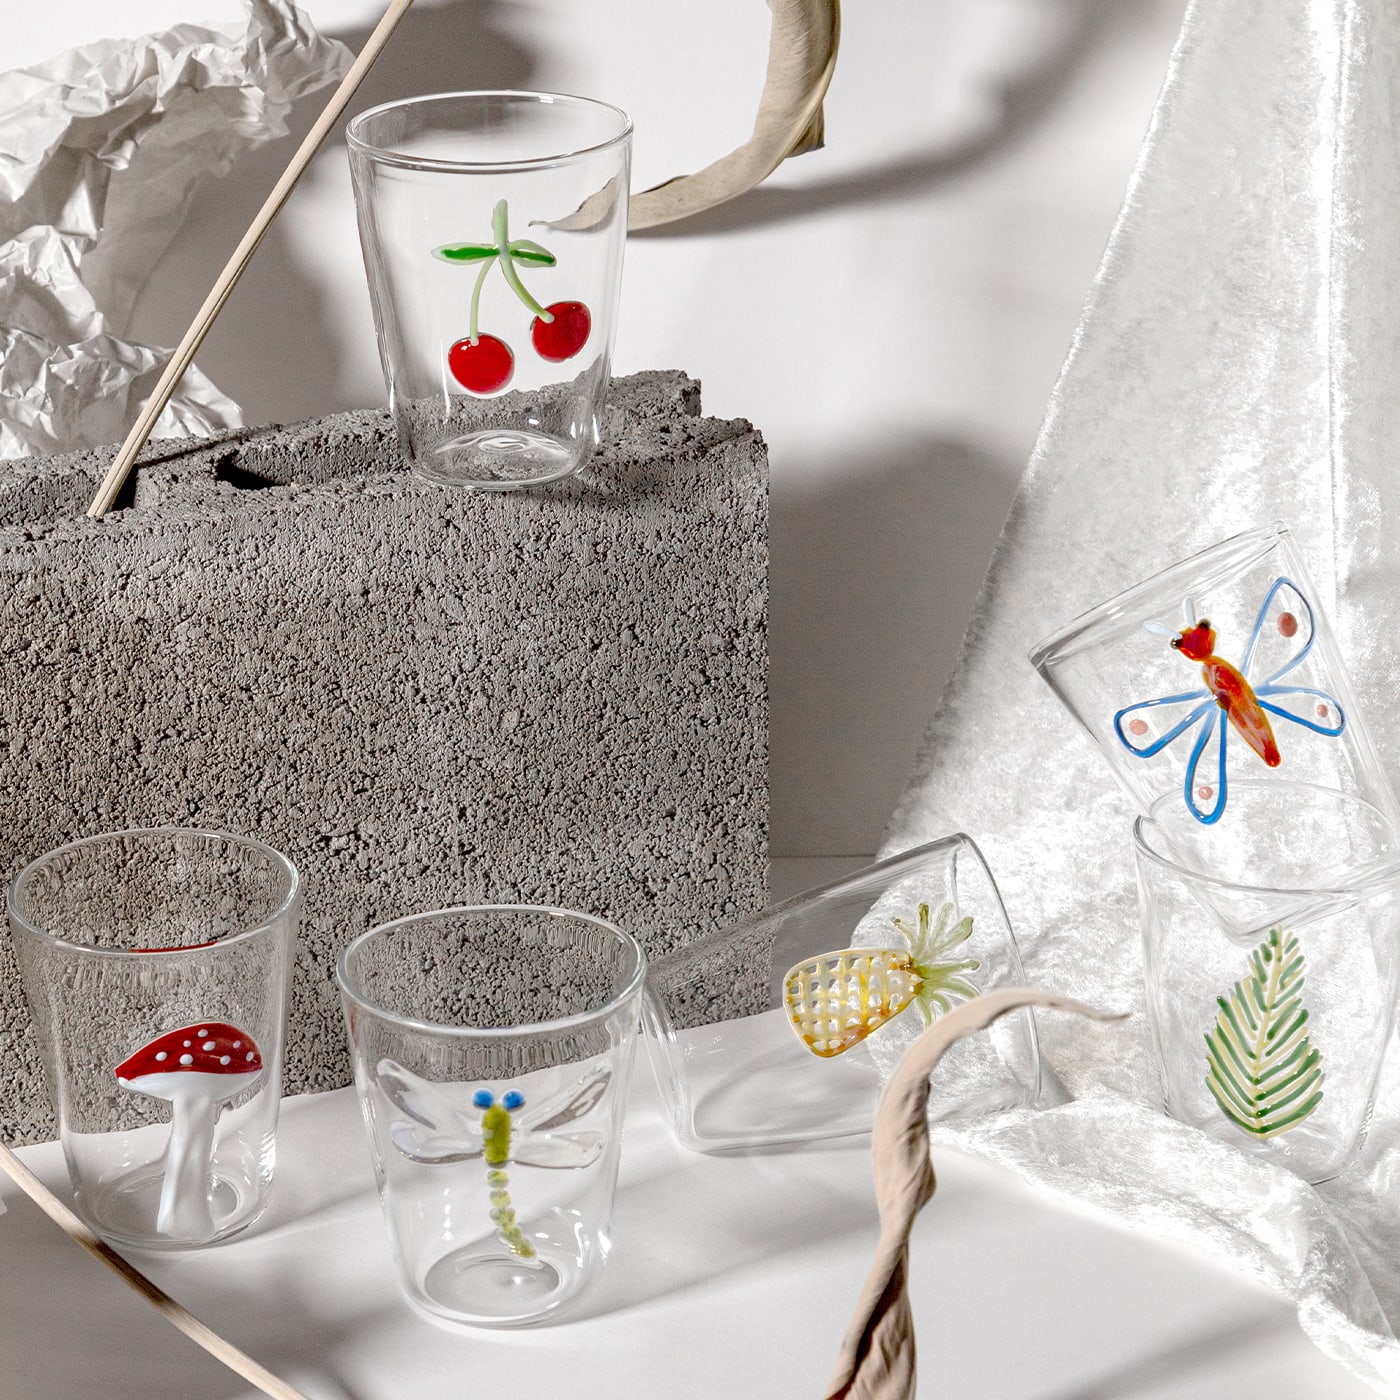 Cabinet de Curiosites Set of 6 Water Glasses #2 - Grand Tour by Vito Nesta